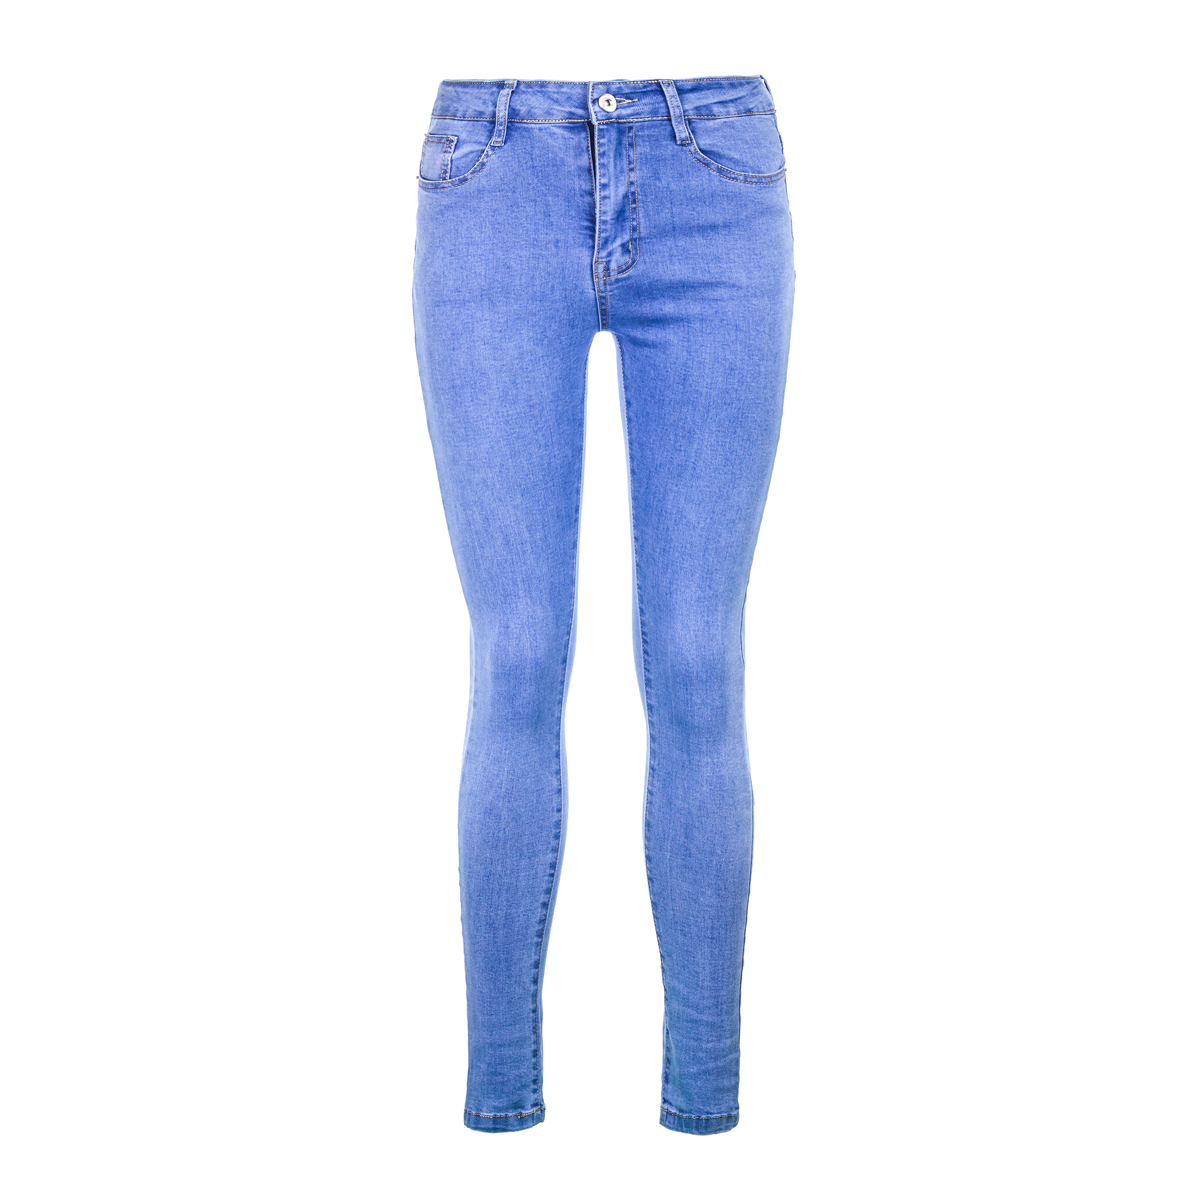 Жен. джинсы арт. 12-0155 Голубой р. 26 Китай, размер 26 - фото 1